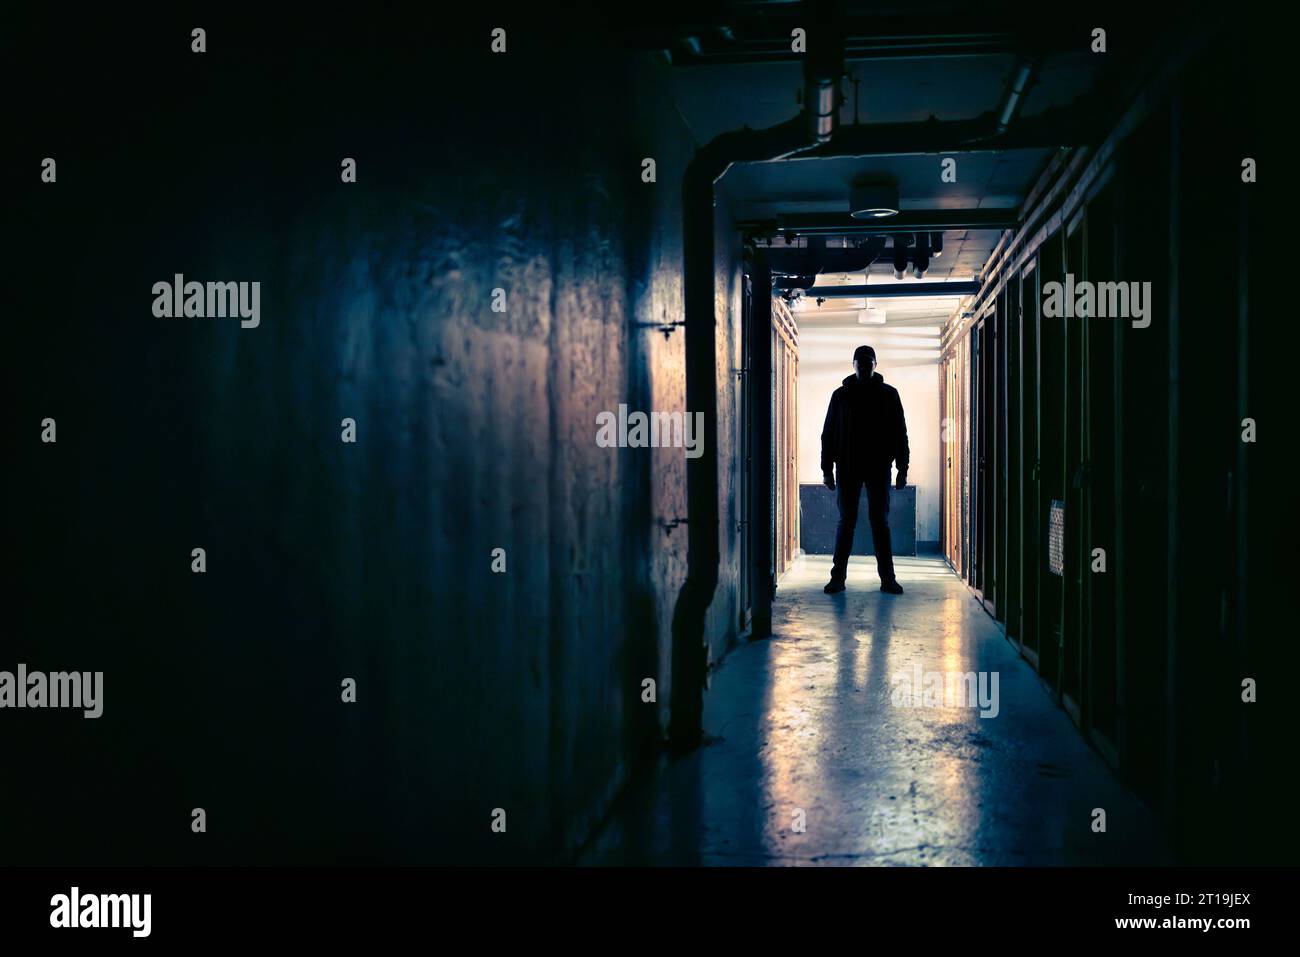 Killer, creepy, scary stalker man in dark corridor. Horror, thriller movie concept. Suspicious silhouette and figure in shadow. Maniac psycho criminal. Stock Photo